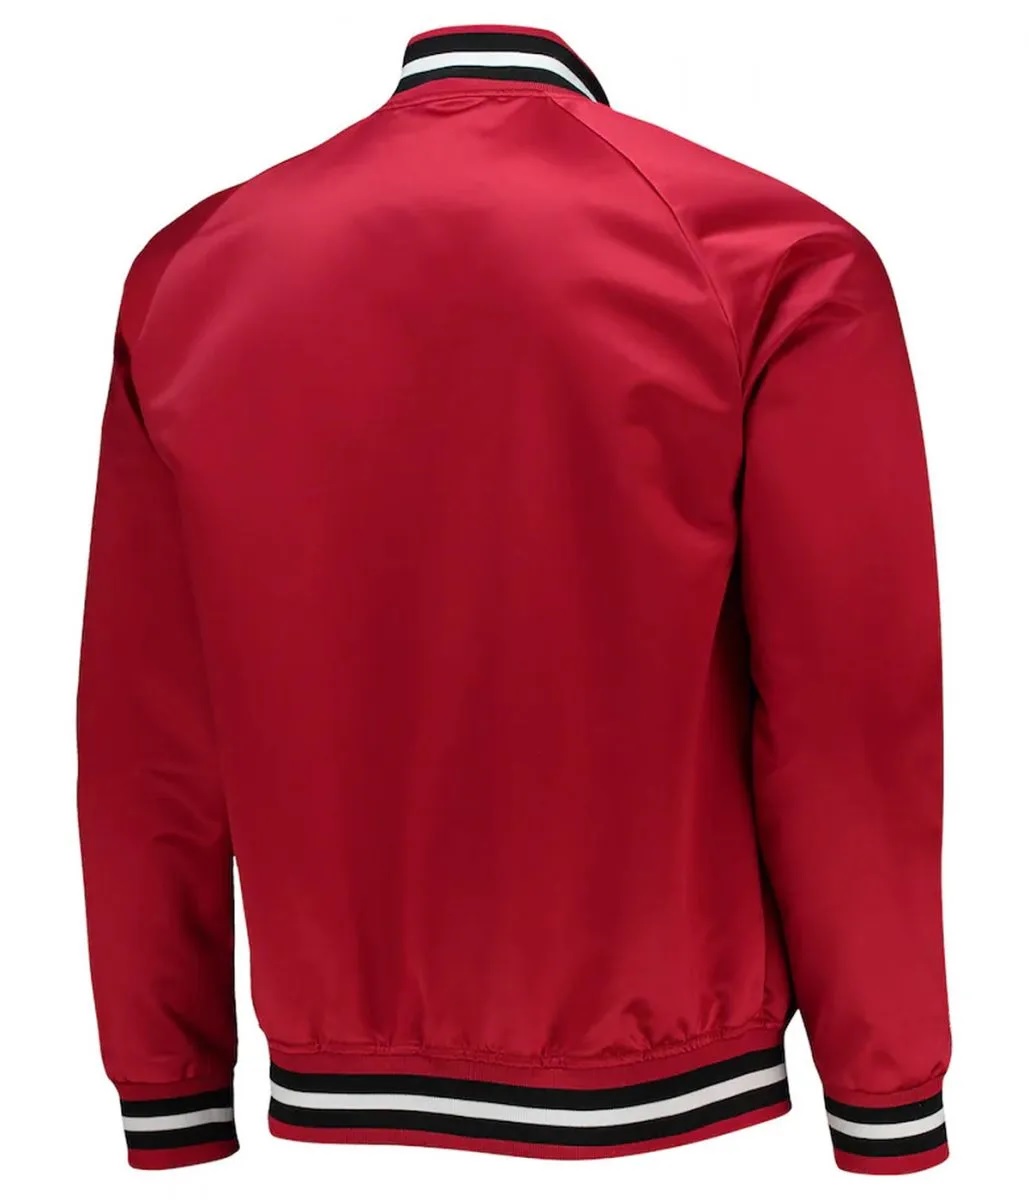 Hardwood Classics Miami Heat Red Jacket